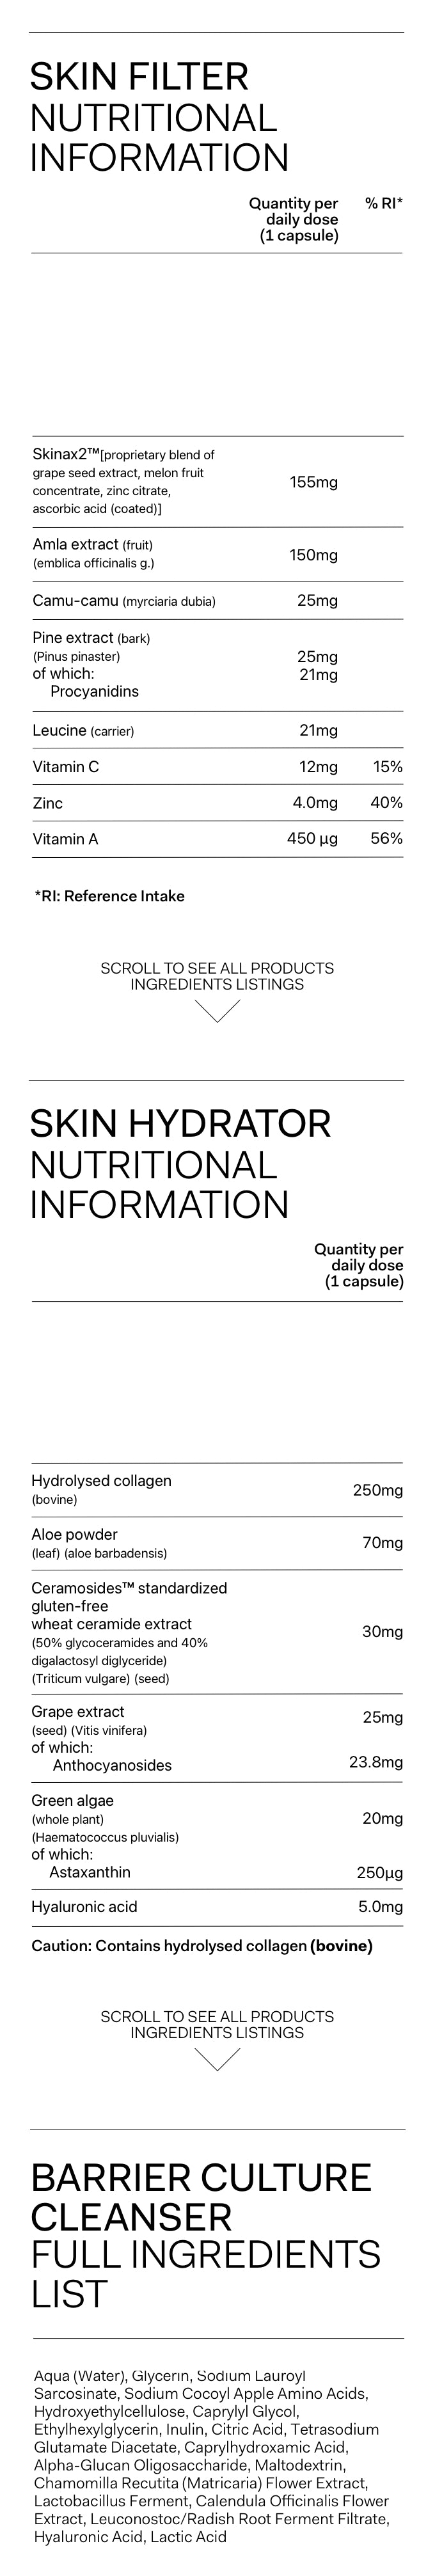 Nutrition Label Mobile